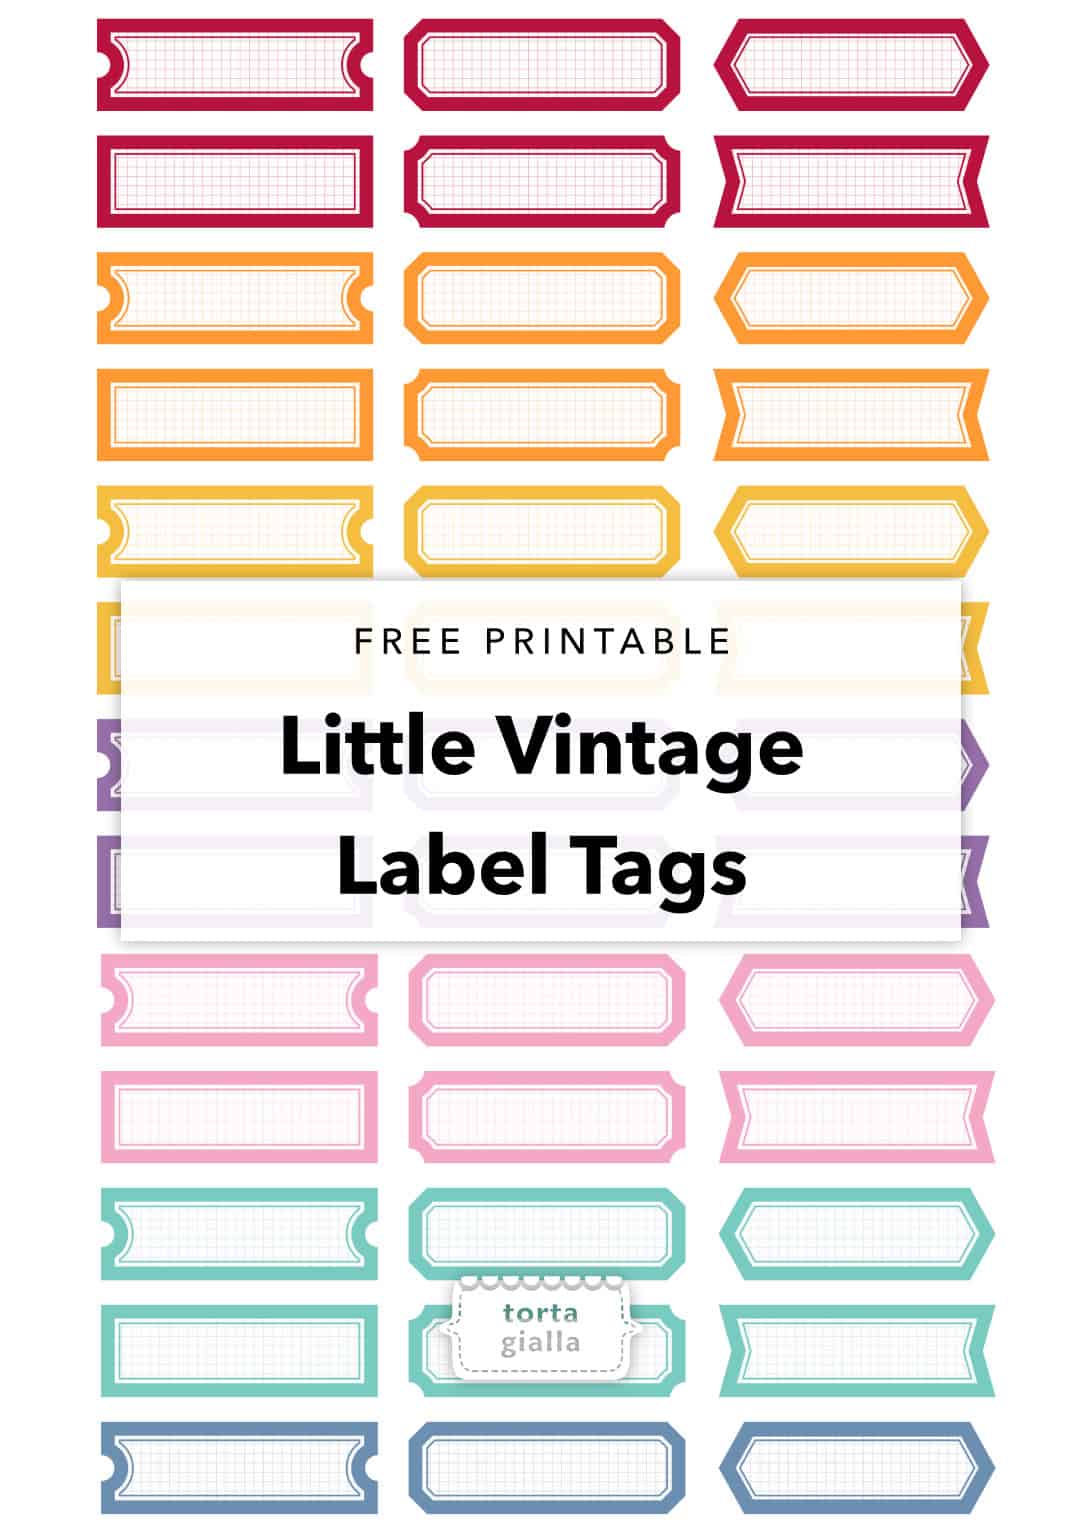 Free Printable Little Vintage Label Tags